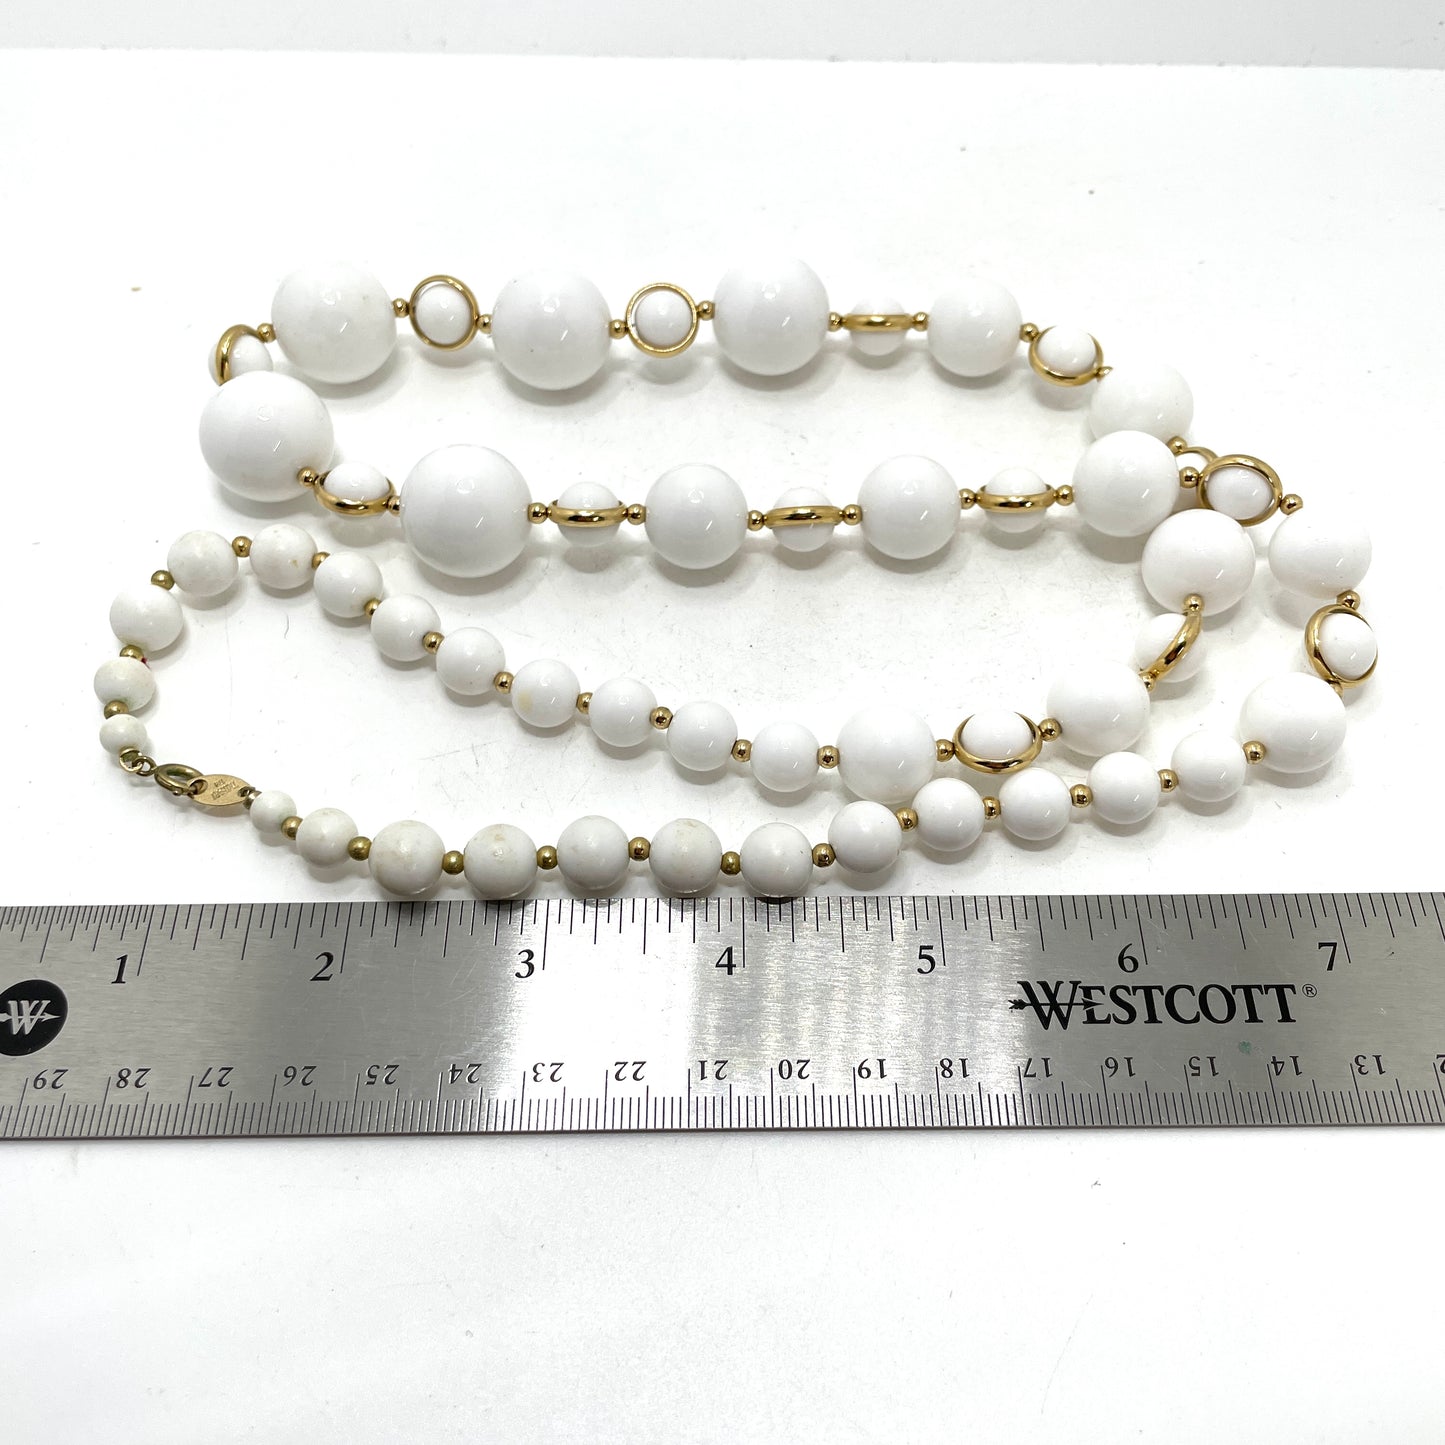 Vintage Trifari White & Gold Beaded Necklace